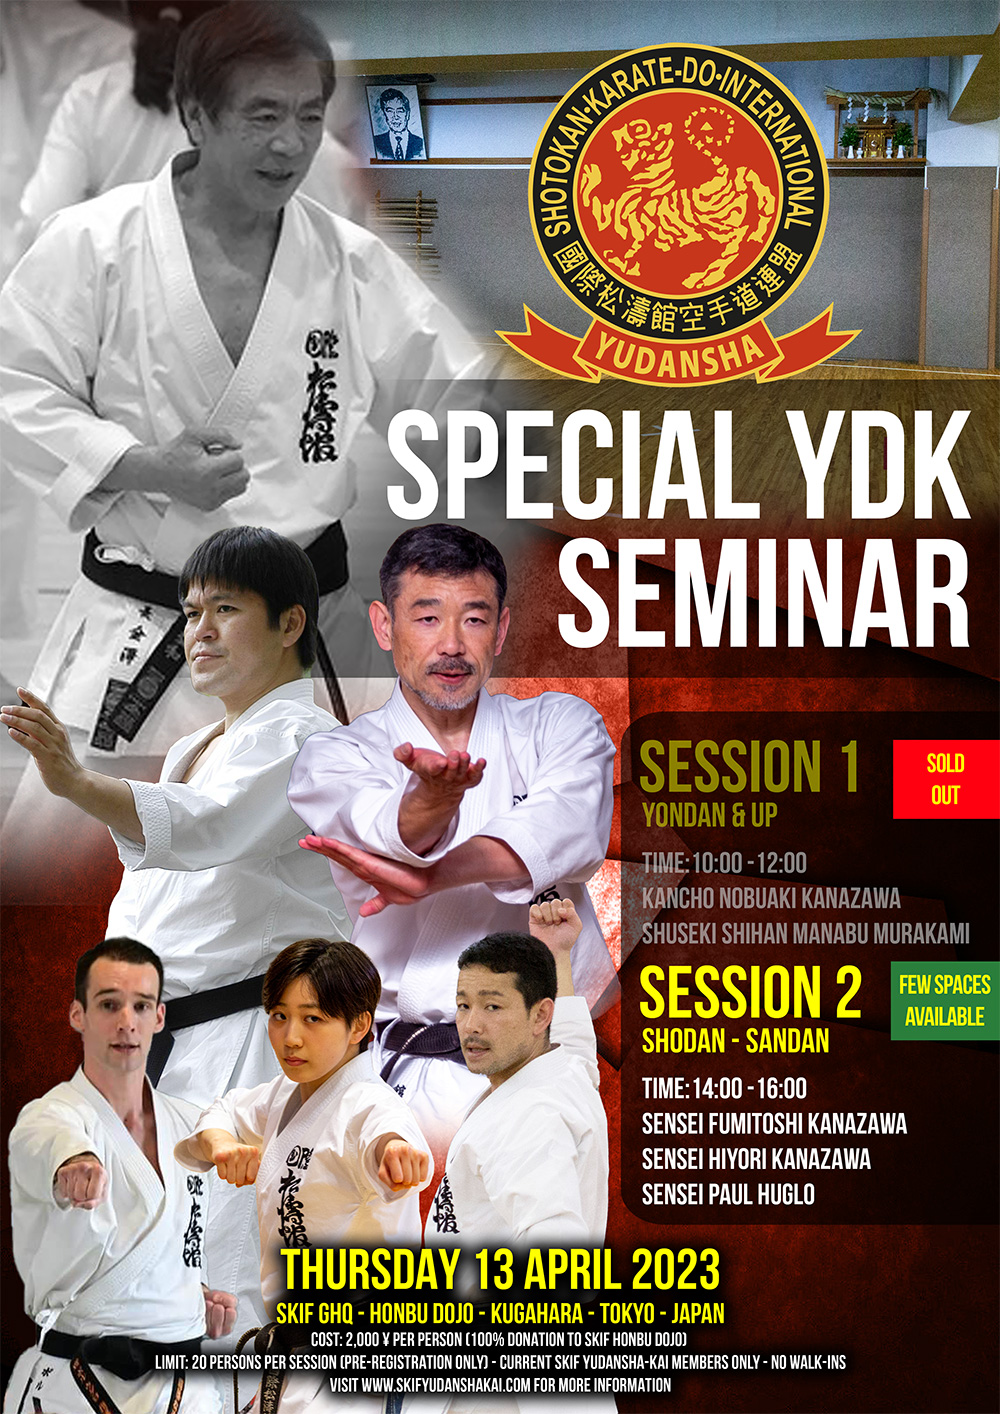 Special SKIF YDK Seminar